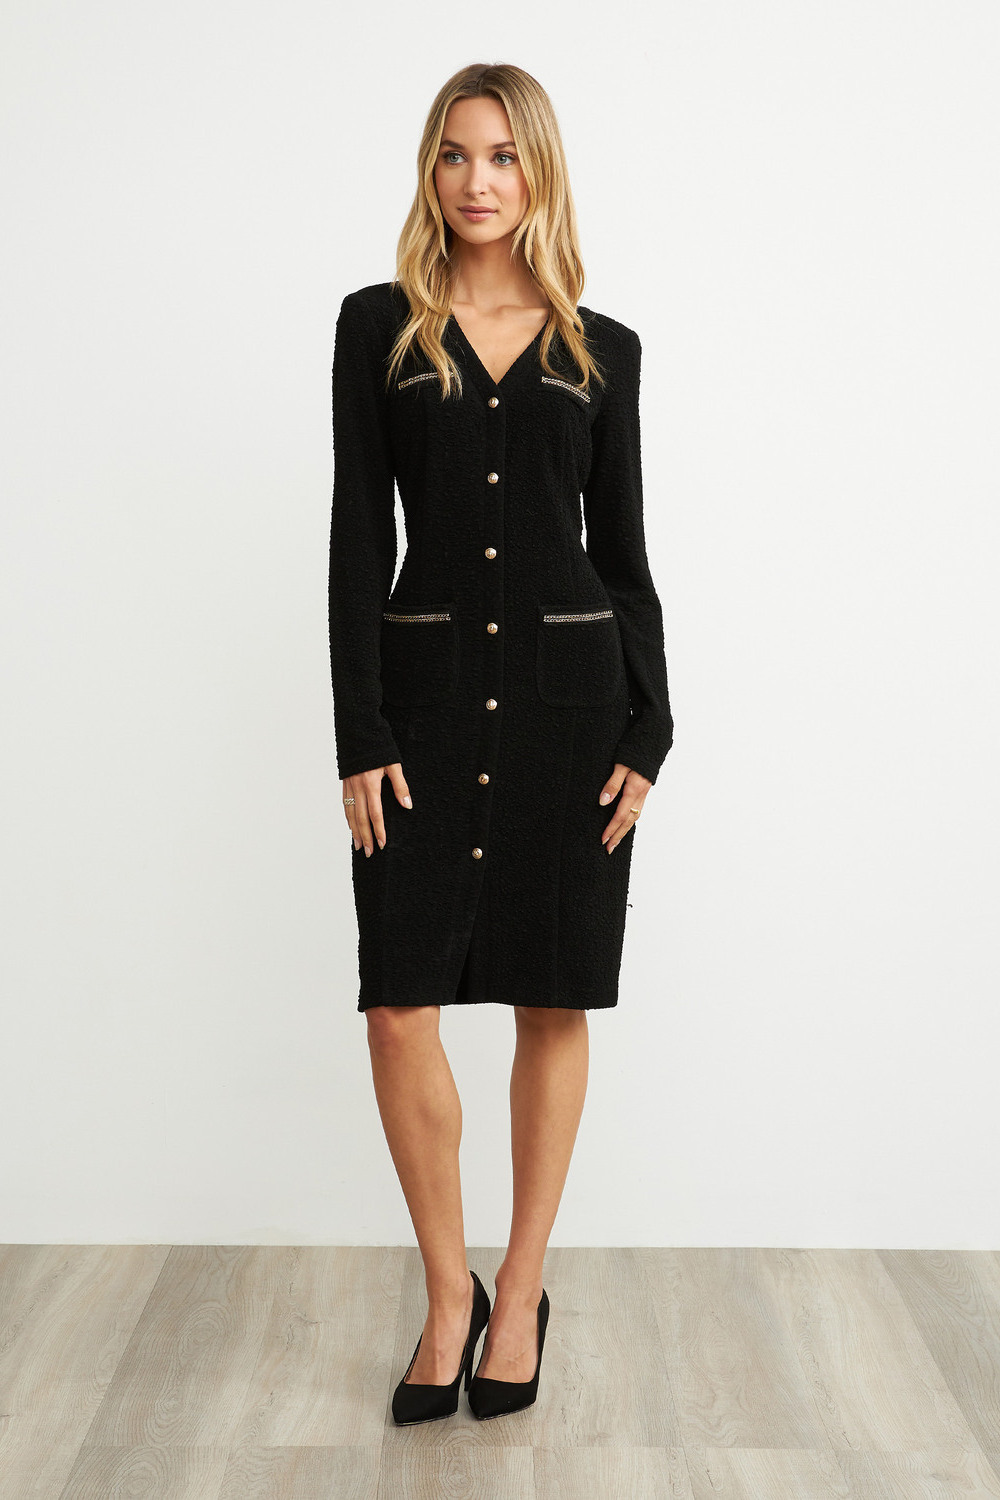 Joseph Ribkoff Button Dress Style 203252. Black